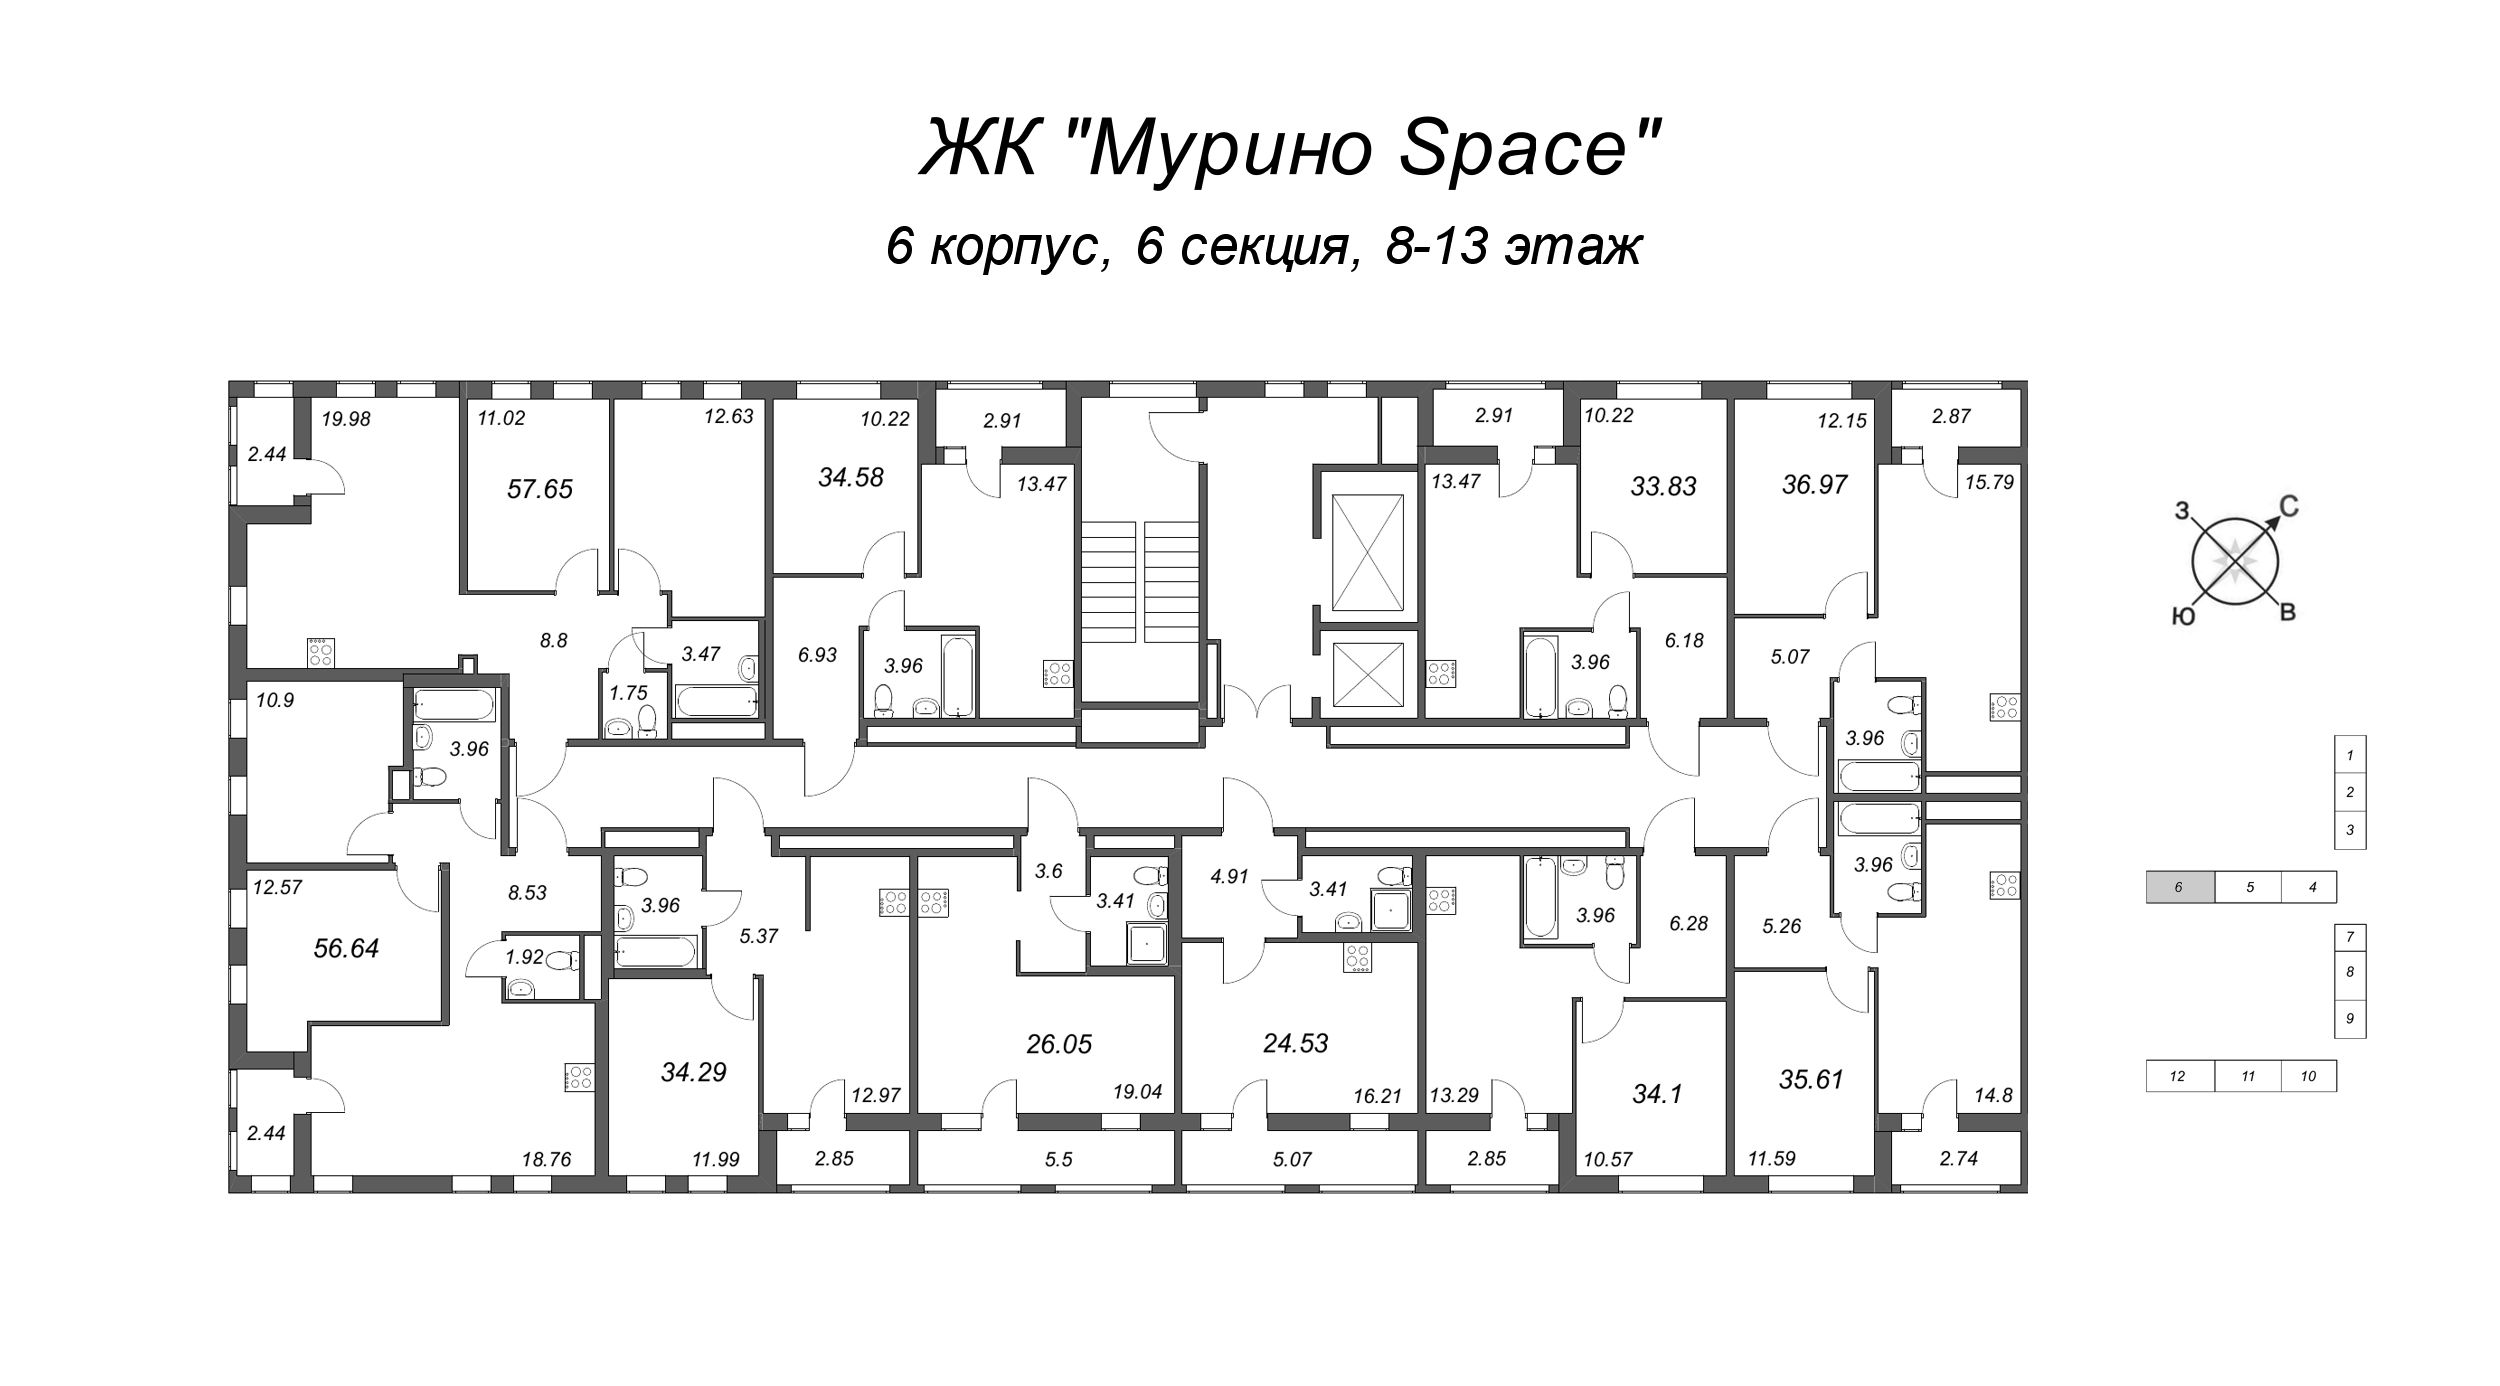 2-комнатная (Евро) квартира, 30.89 м² - планировка этажа